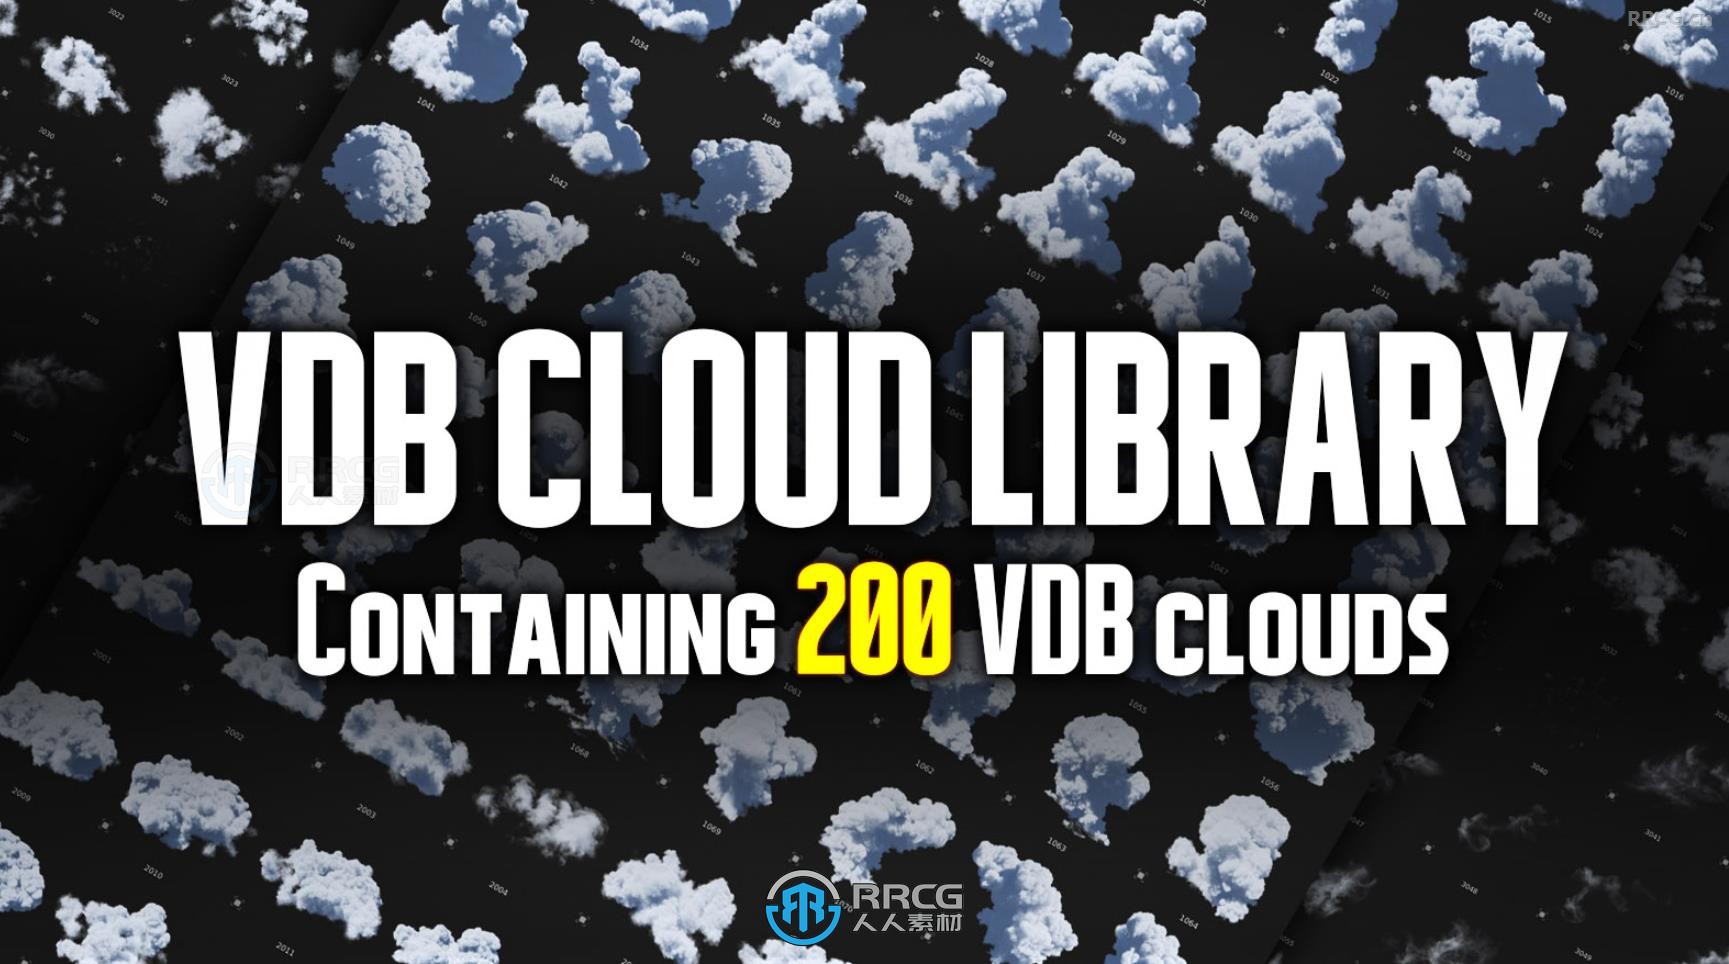 Real Cloud Generator Clouds Library高质量云彩生成与资产库Blender插件V1.0.2版